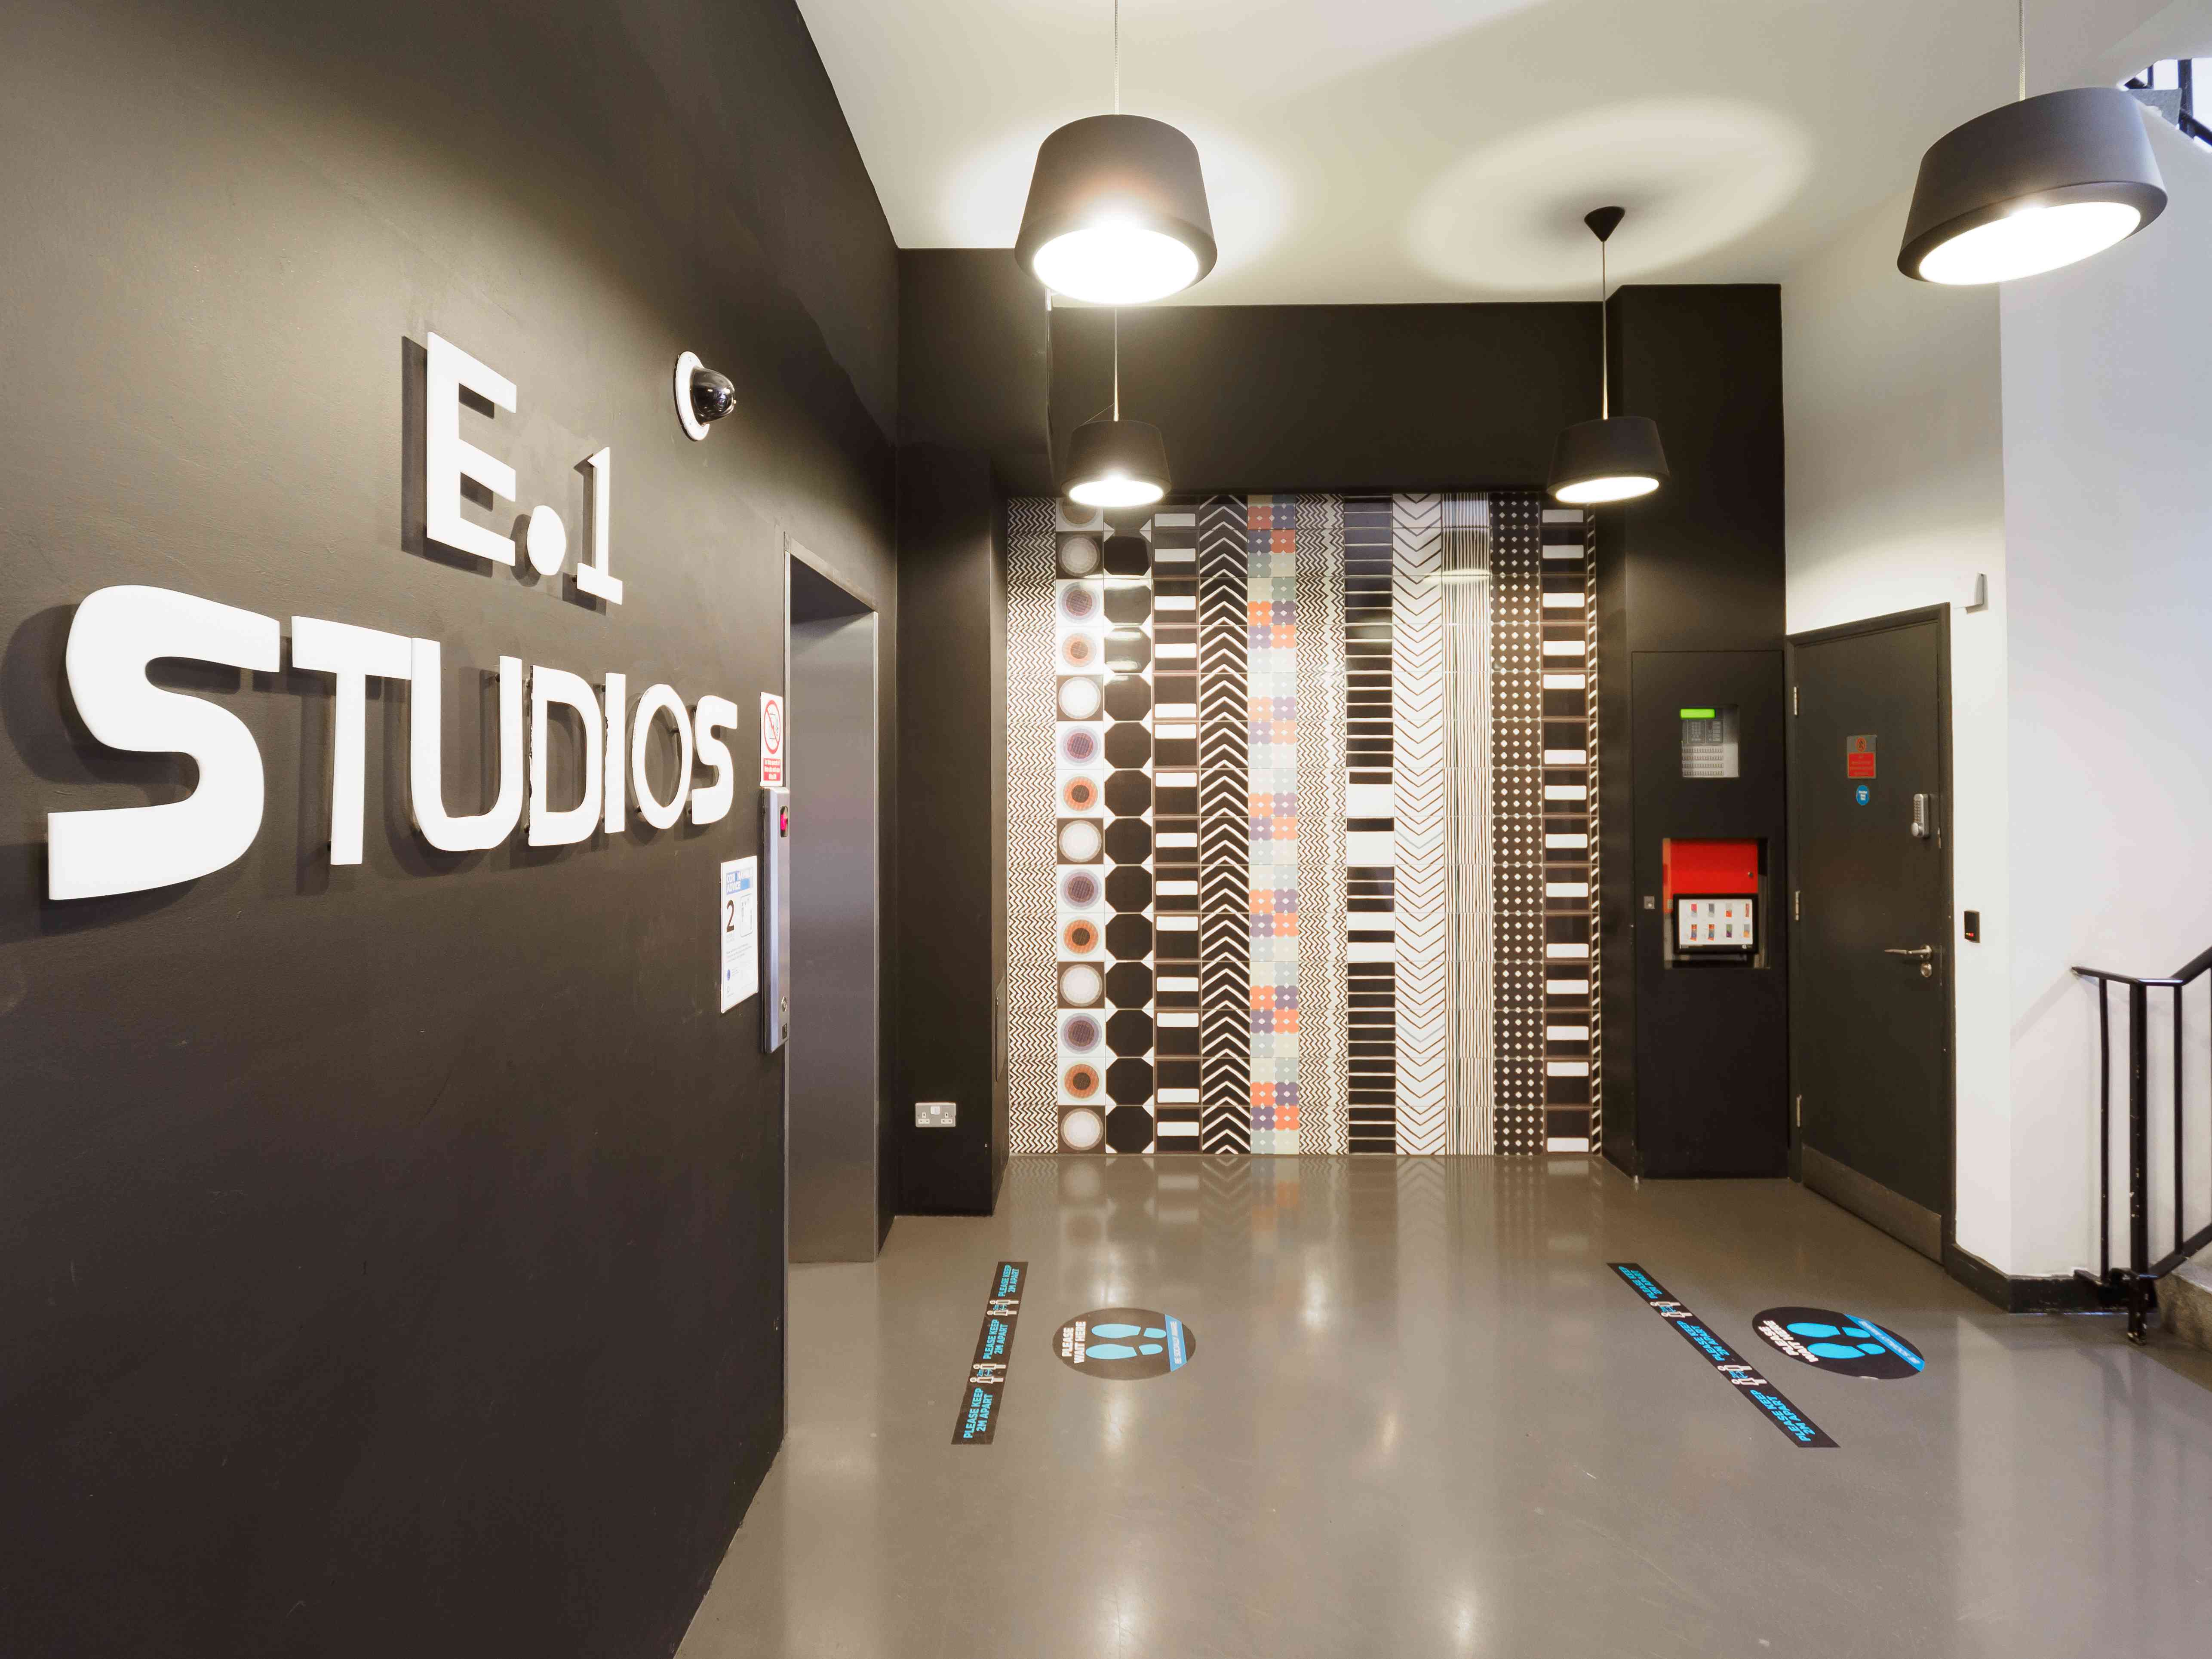 E1 Studios Entrance, studio space to rent Whitechapel Workspace® | E1 Studios London 020 3813 2669